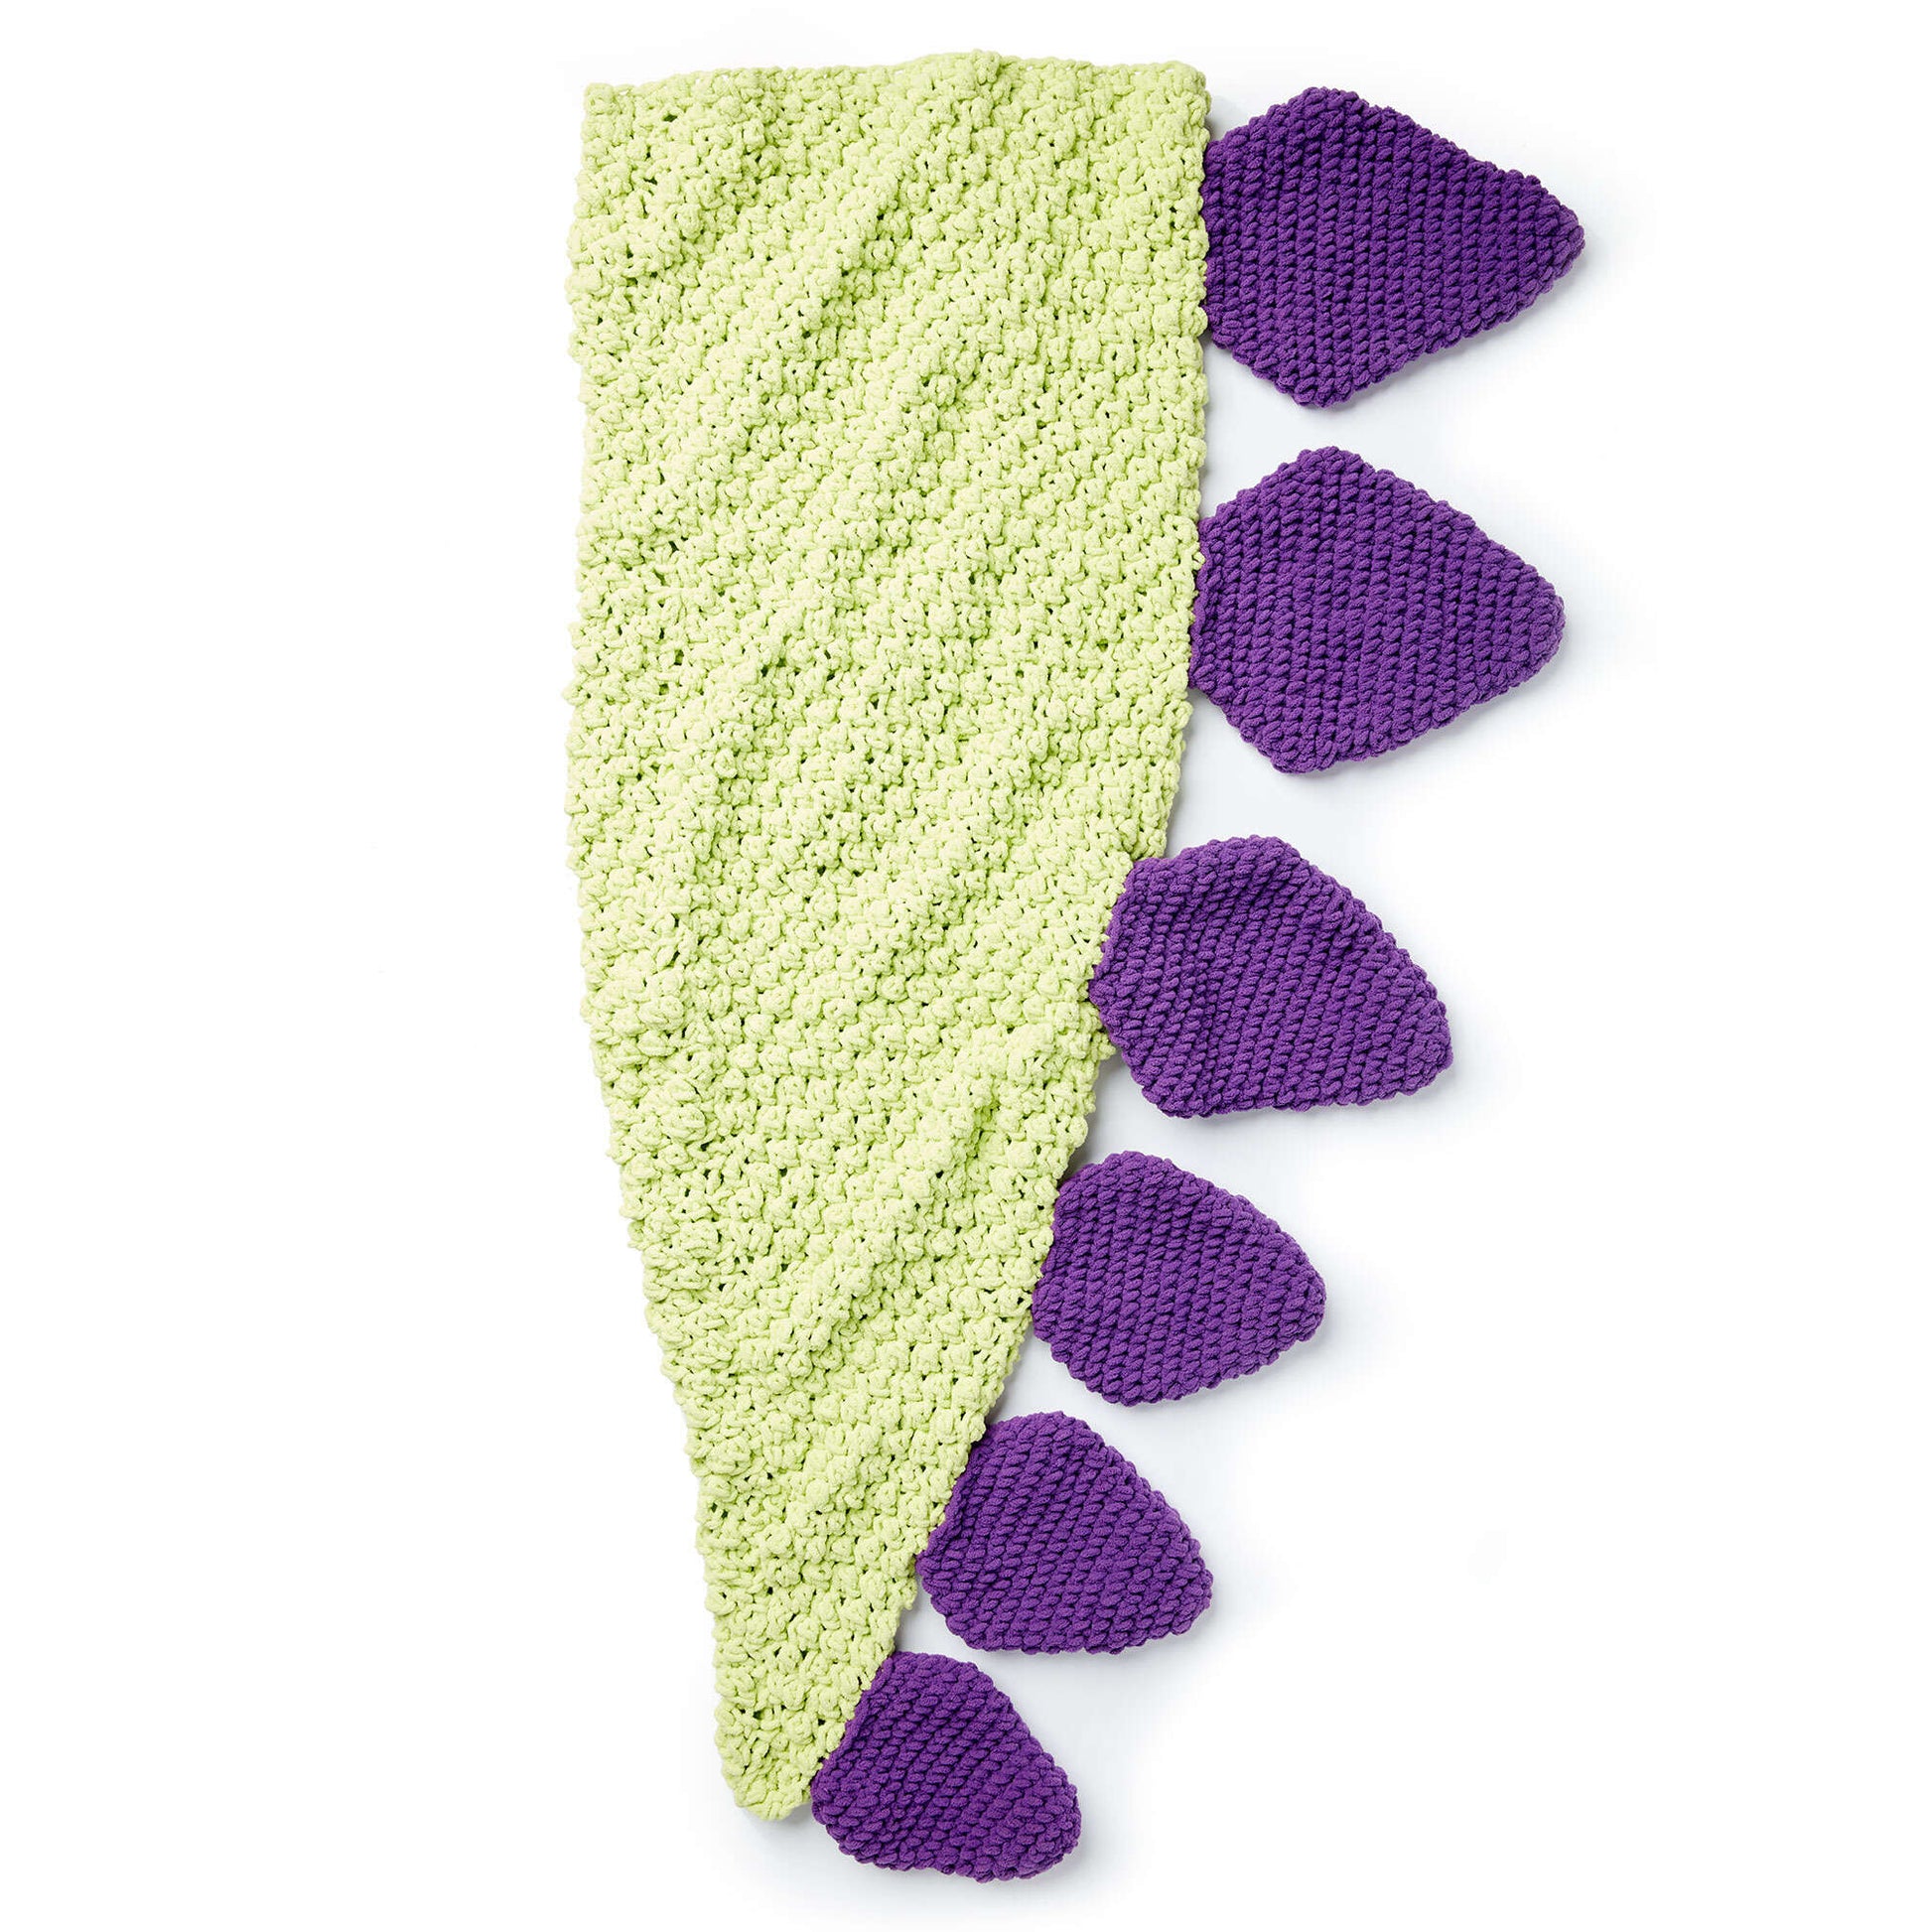 Bernat Dino Tail Crochet Snuggle Sack Crochet Blanket made in Bernat Baby Blanket yarn